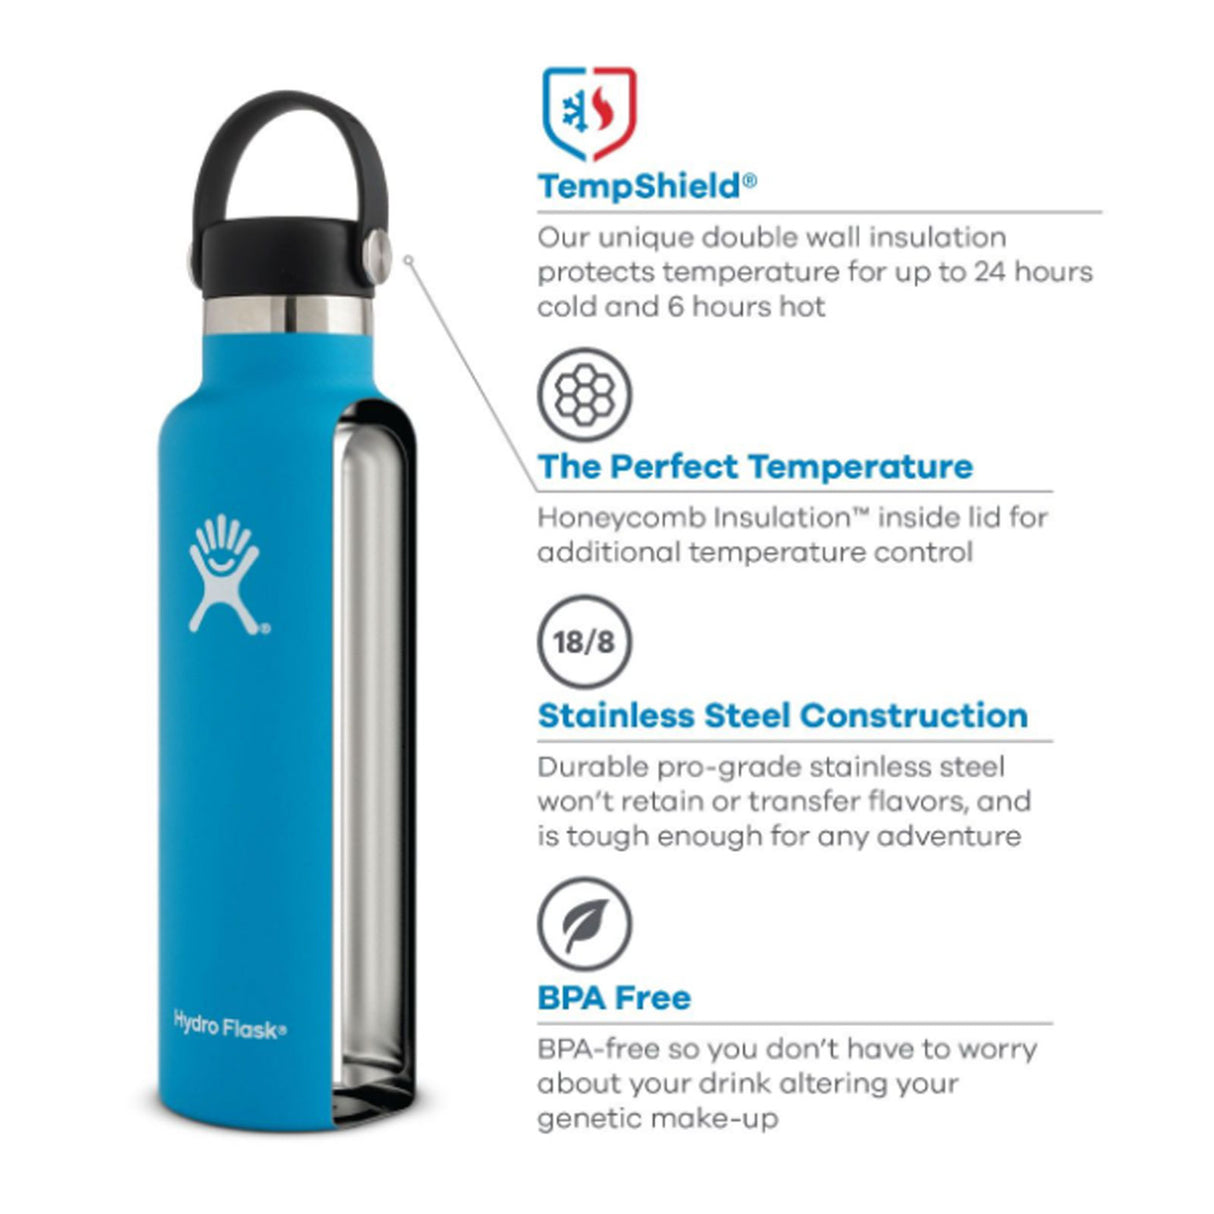 Hydro Flask Standard Mouth 21 oz. Bottle with Flex Cap